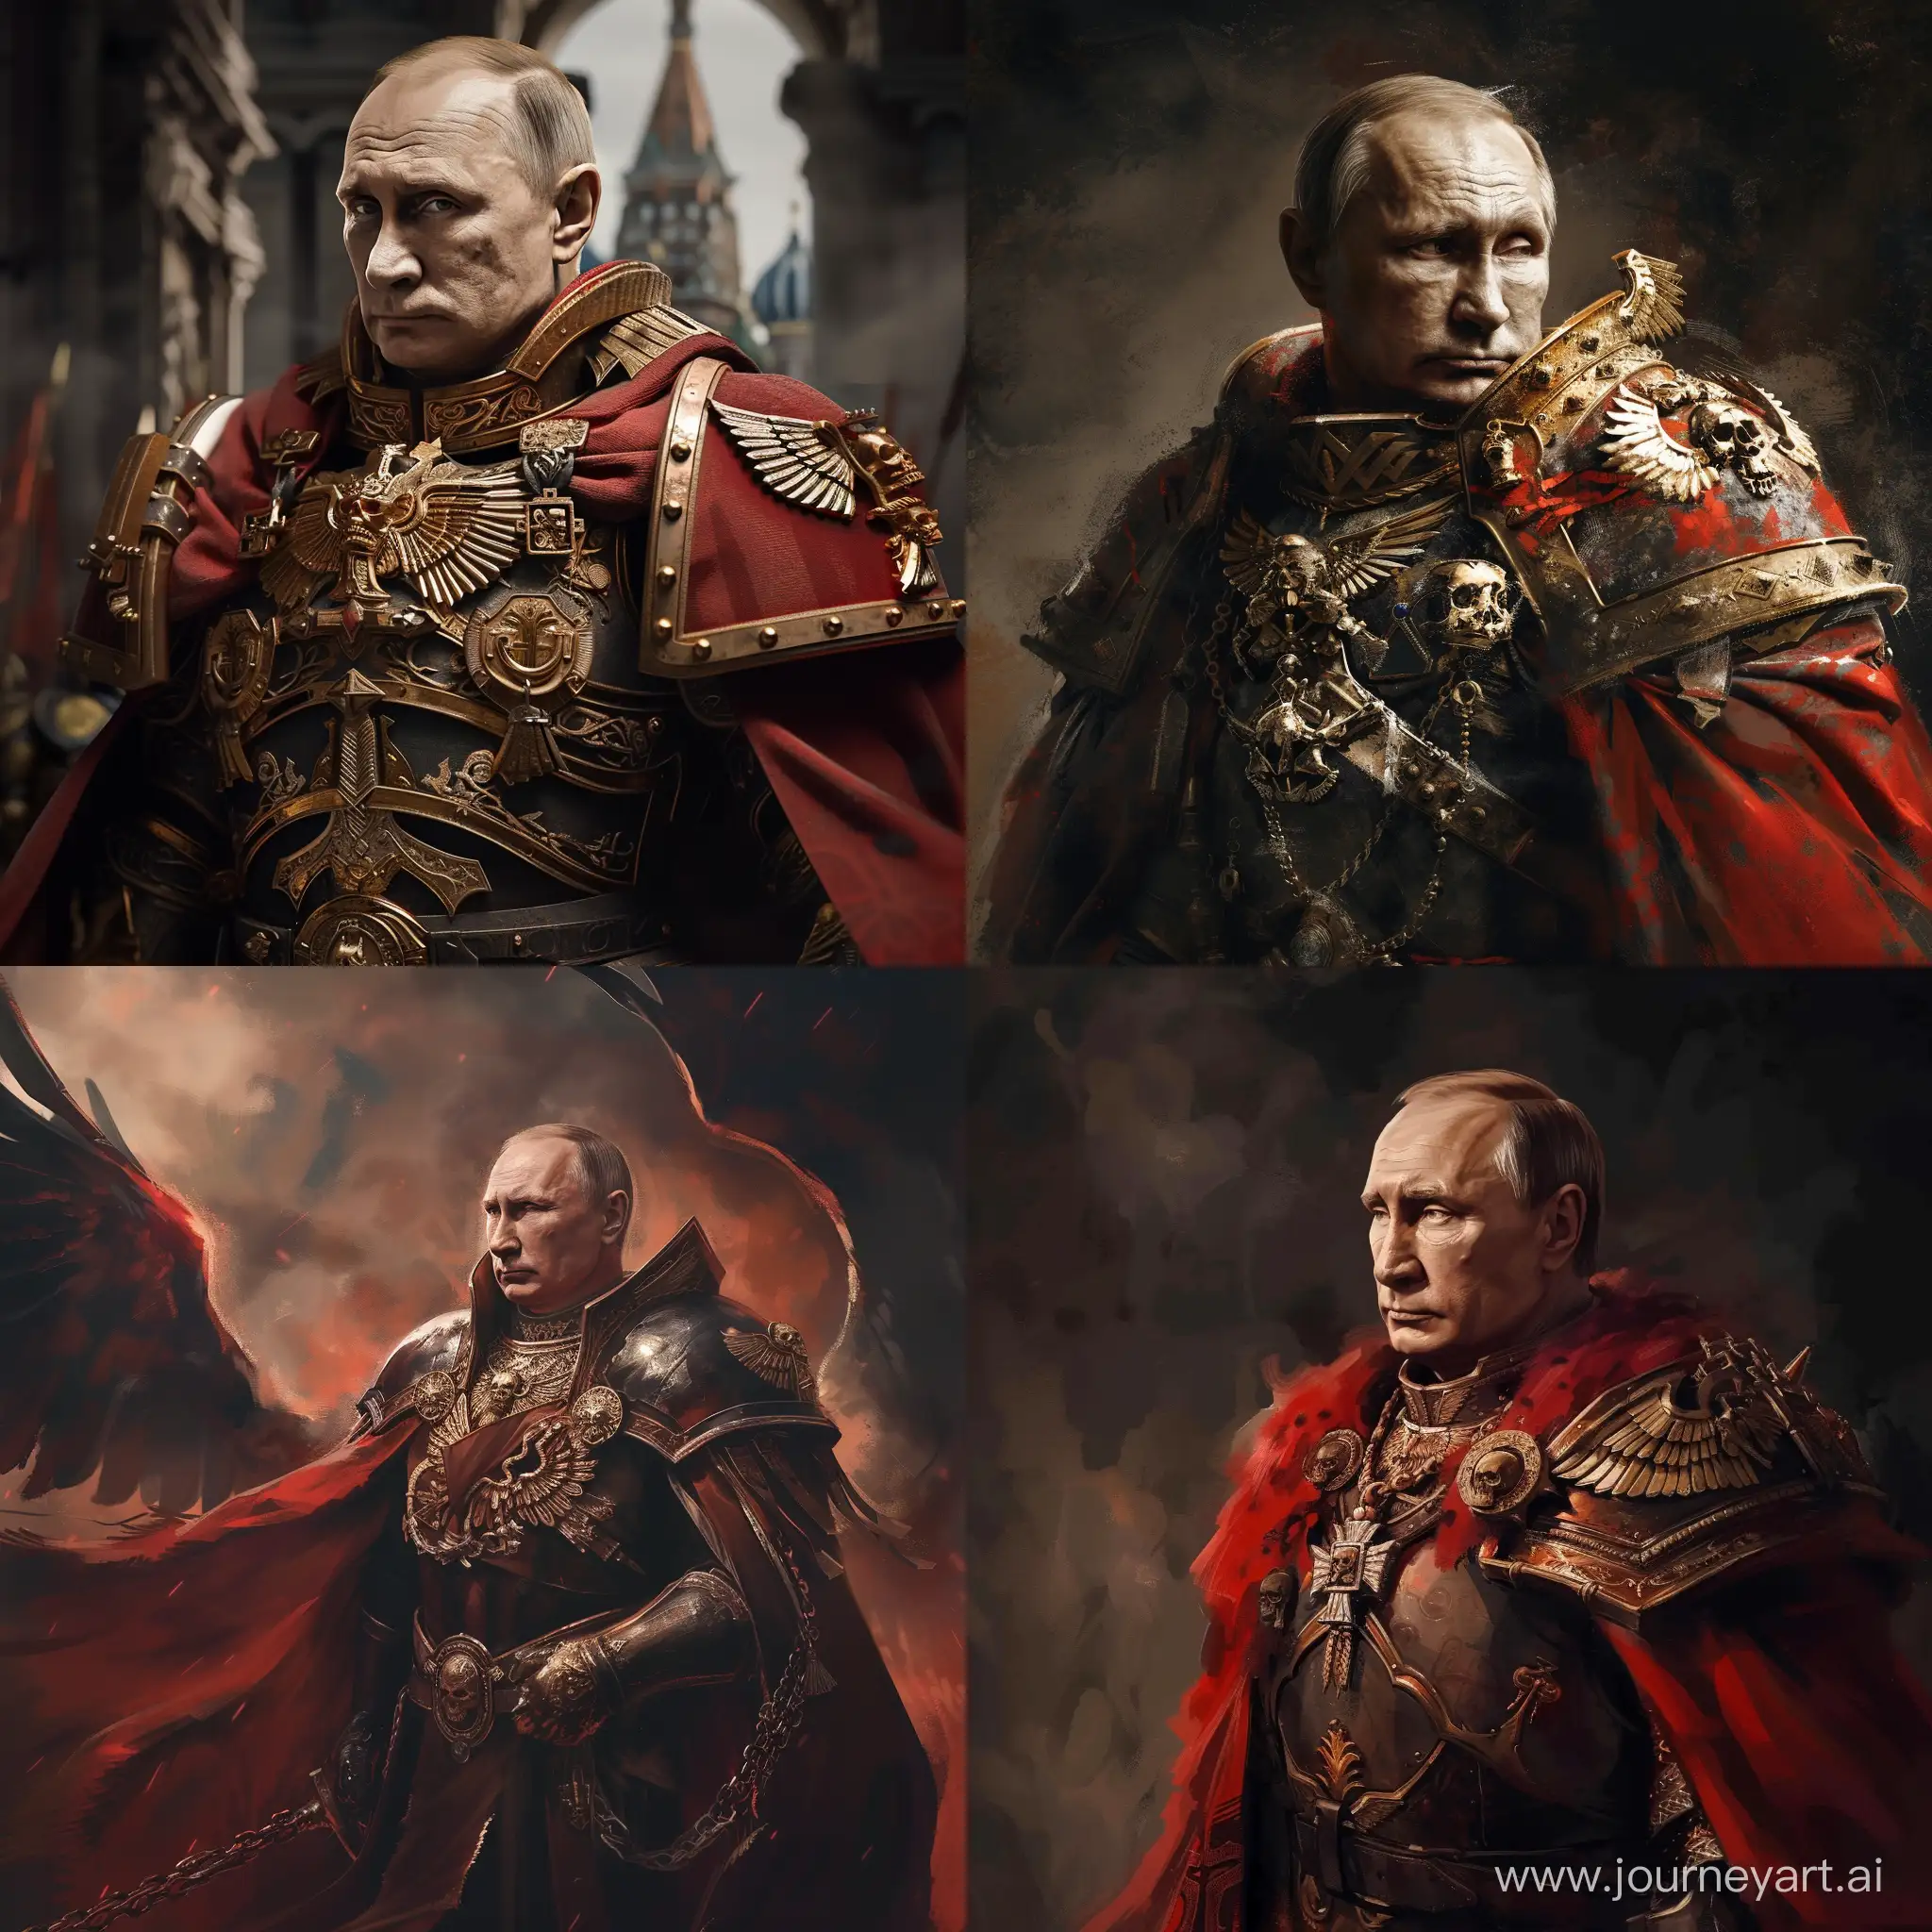 Vladimir-Putin-as-GodEmperor-from-Warhammer-Universe